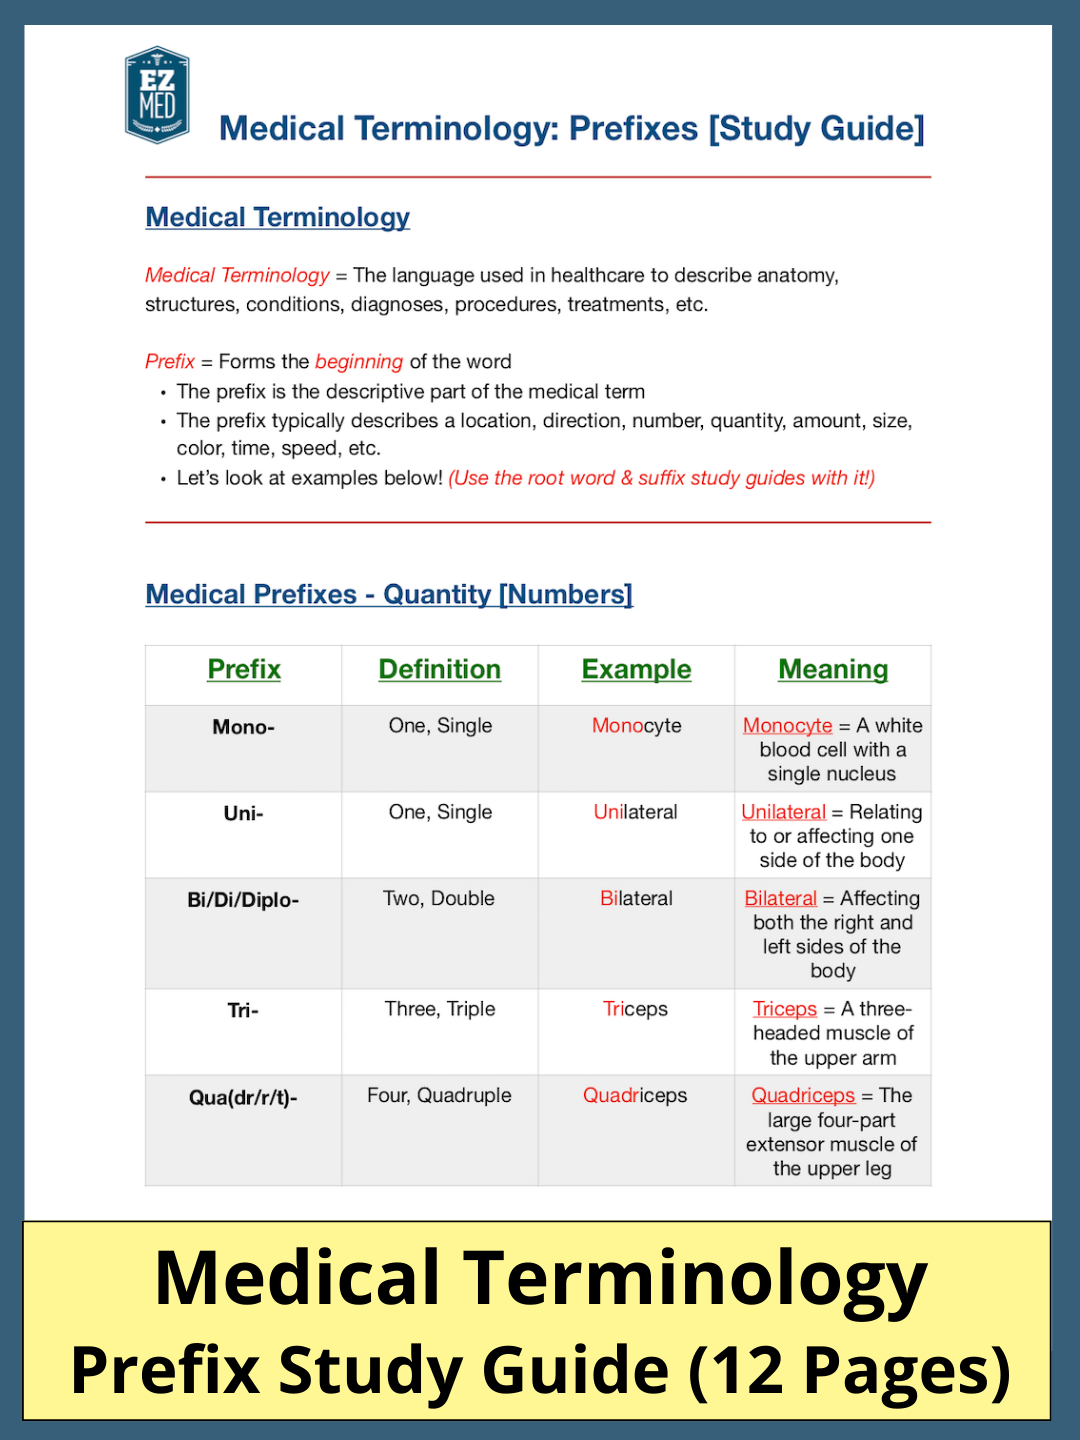 Prefixes: Medical Terminology [Study Guide]